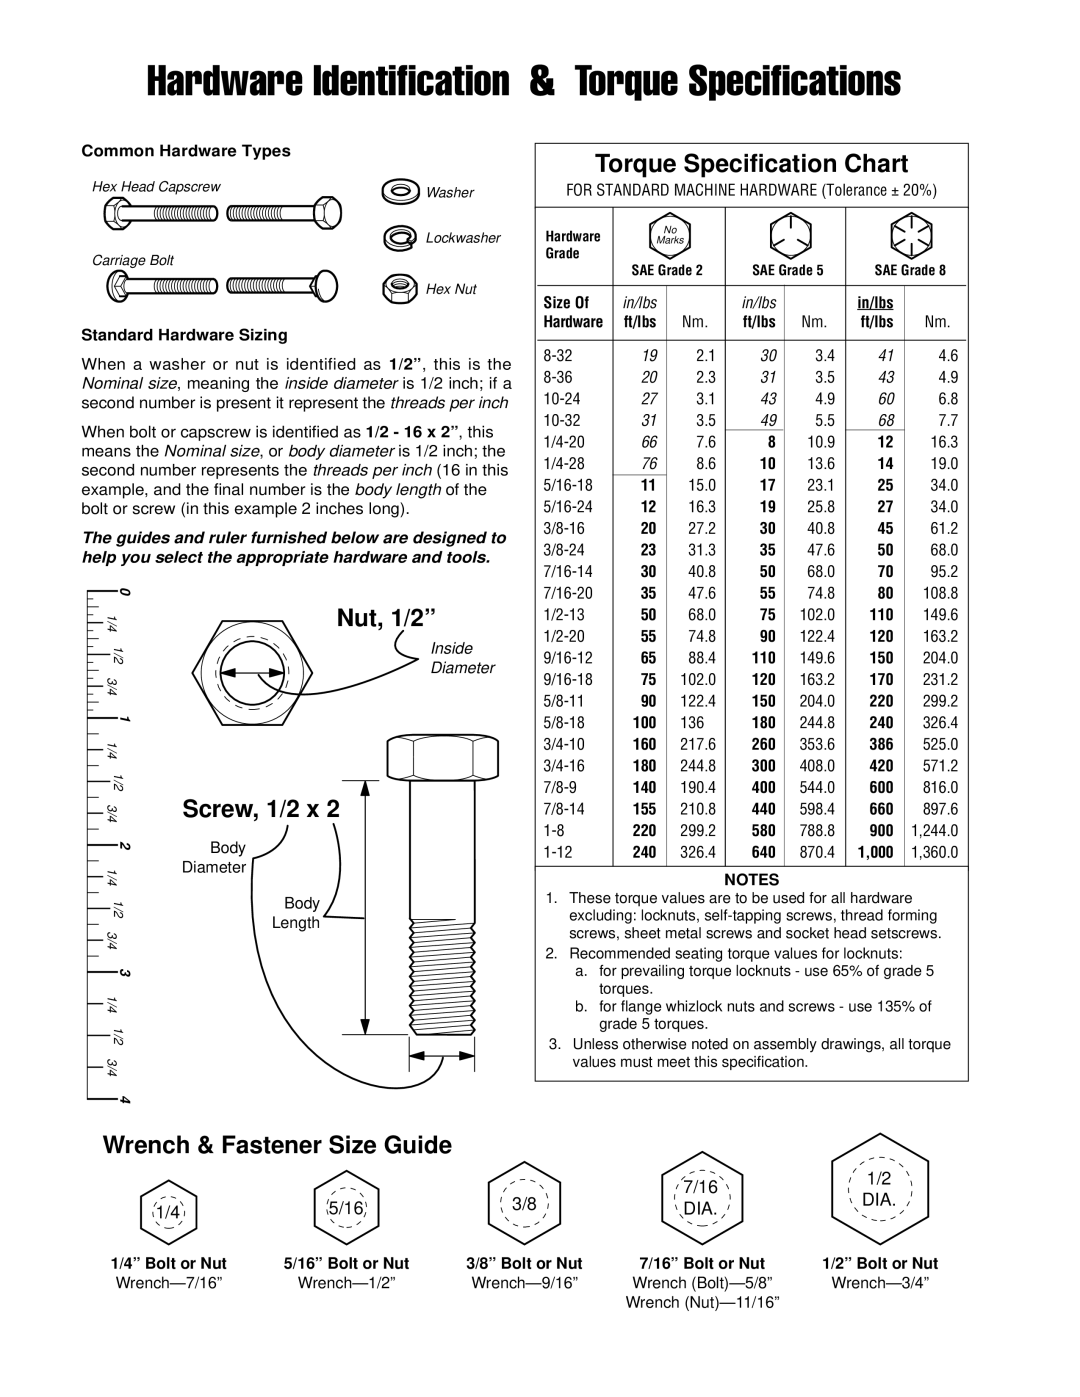 Snapper 2395 manual Hardware Identification & Torque Specifications, Torque Specification Chart, Nut, 1/2”, Screw, 1/2 